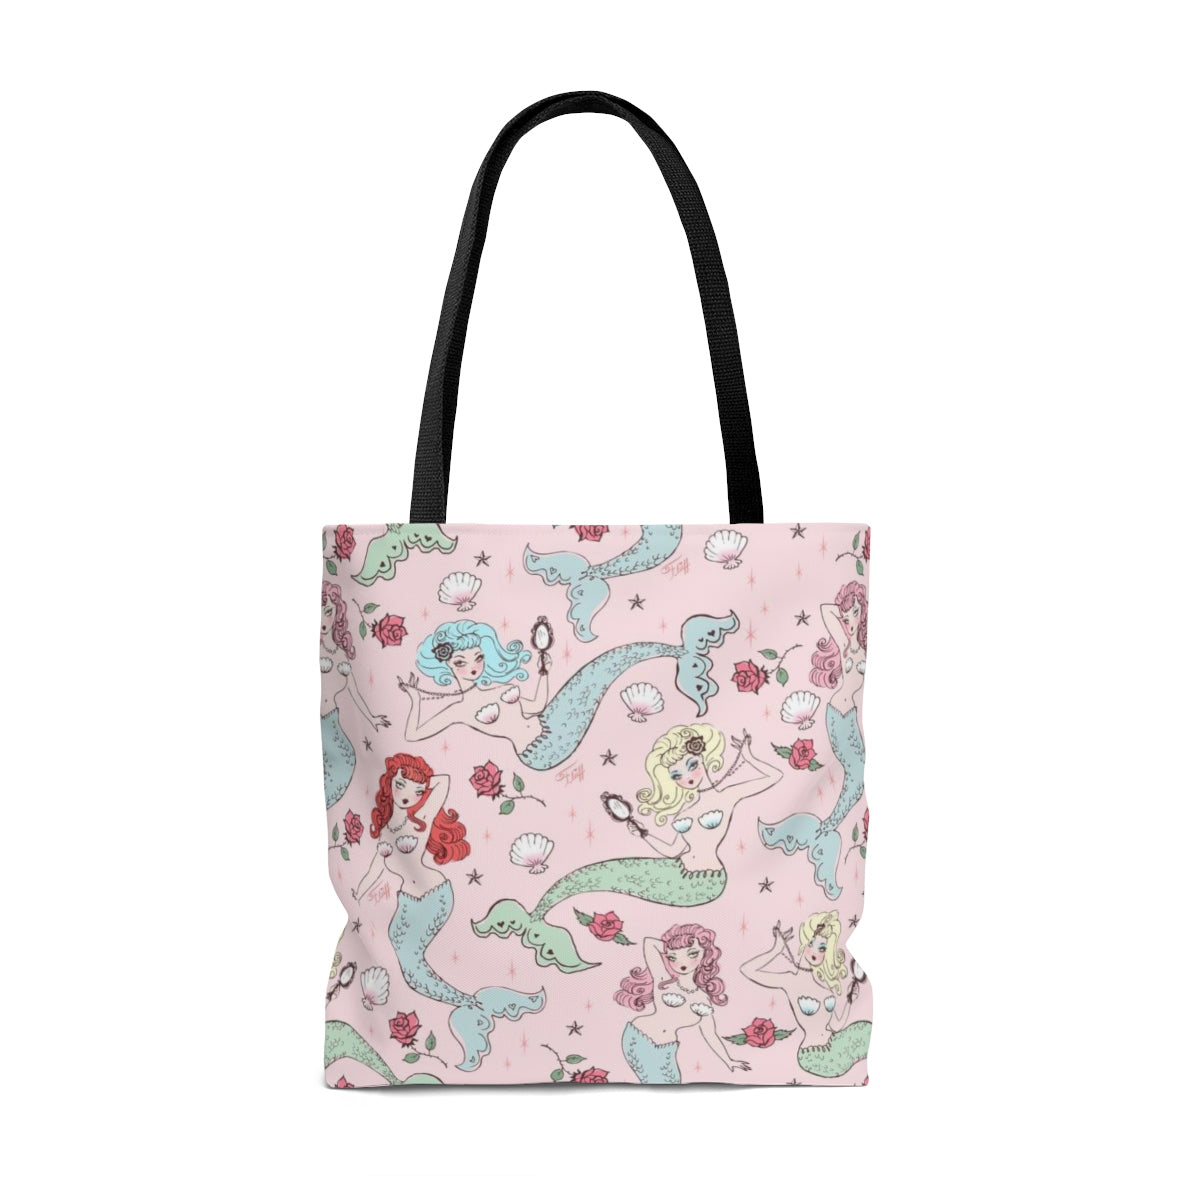 Mermaids and Roses on Pink • Tote Bag